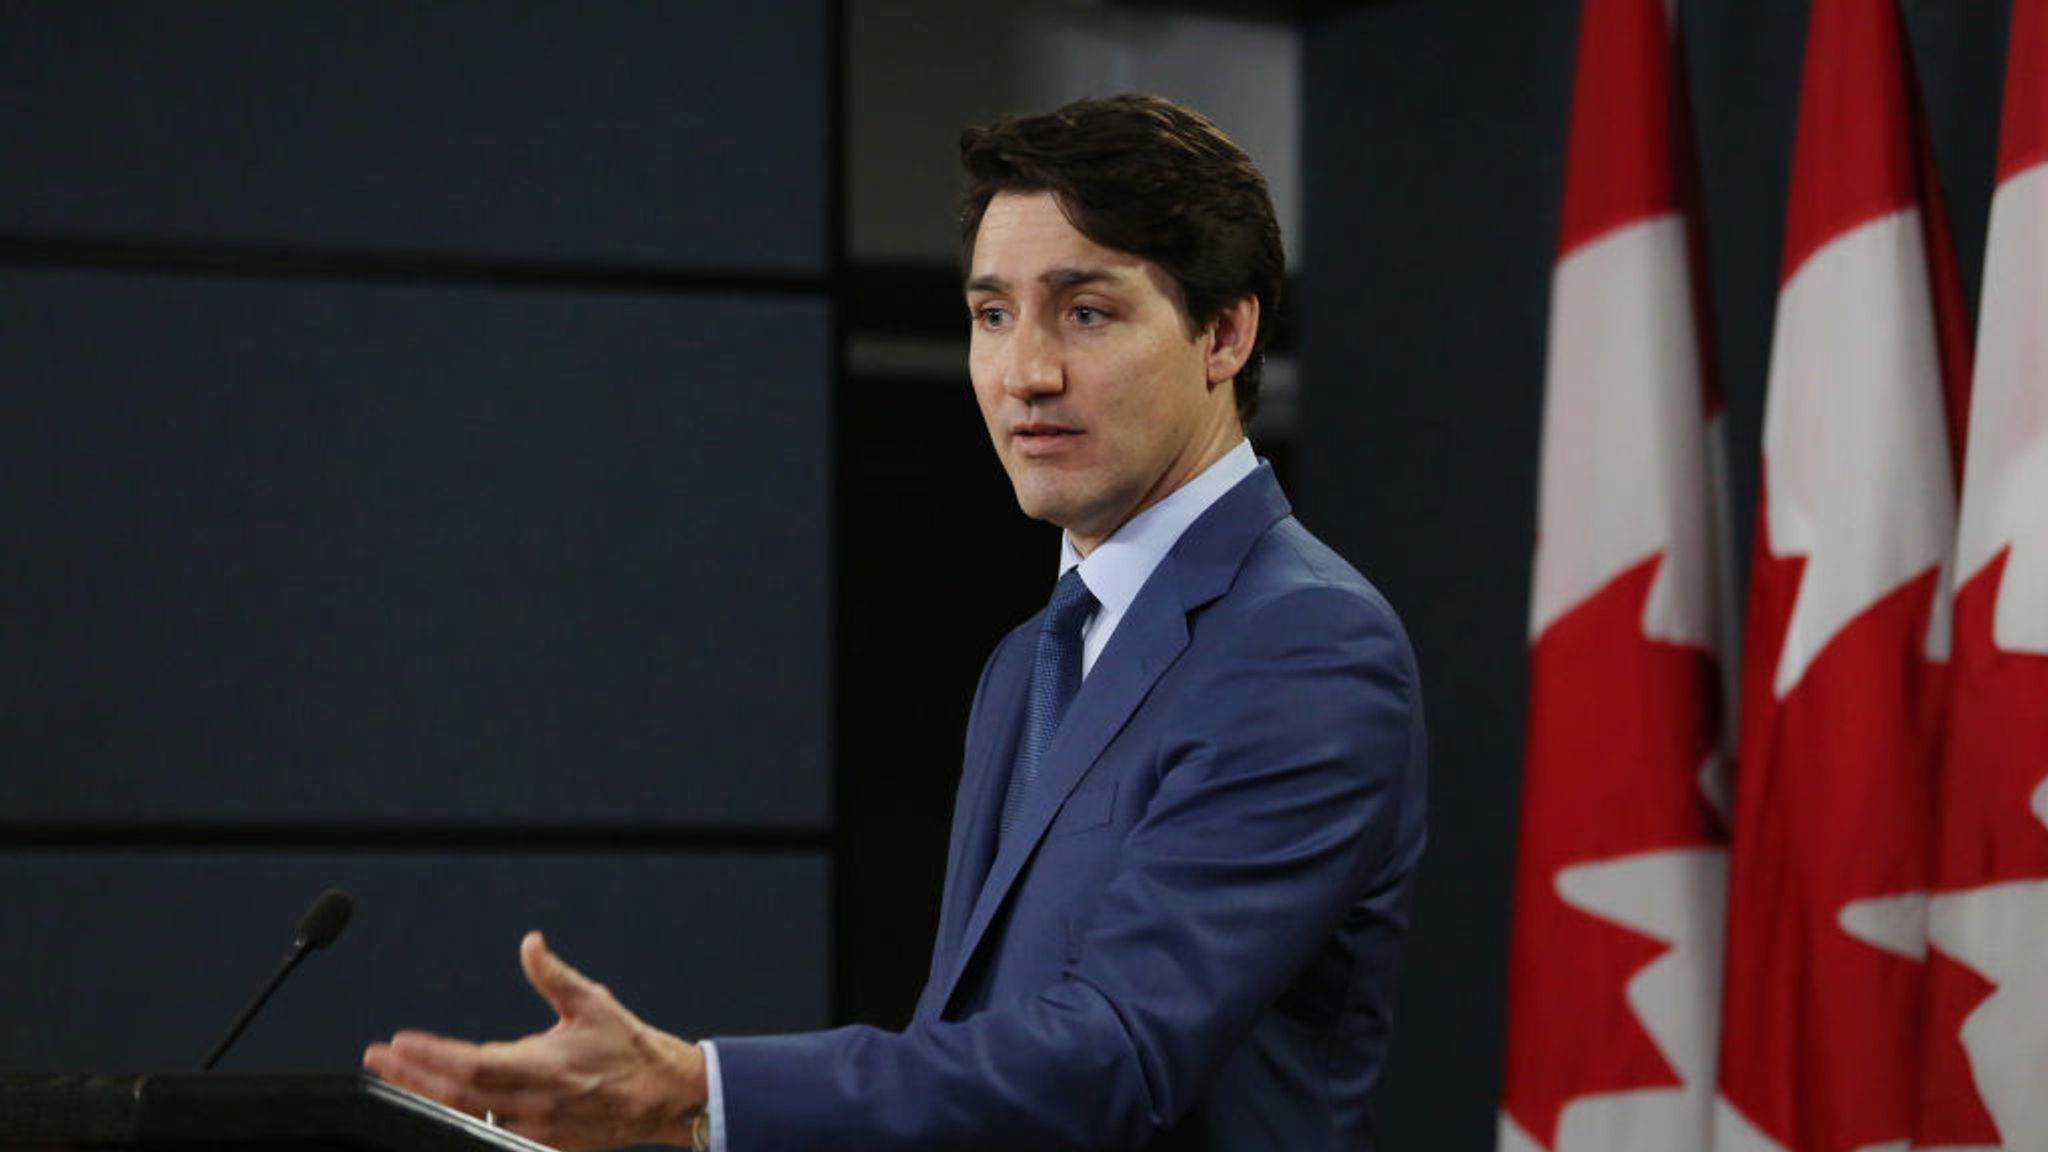 Blackface image 'nightmare' for liberal superstar Trudeau